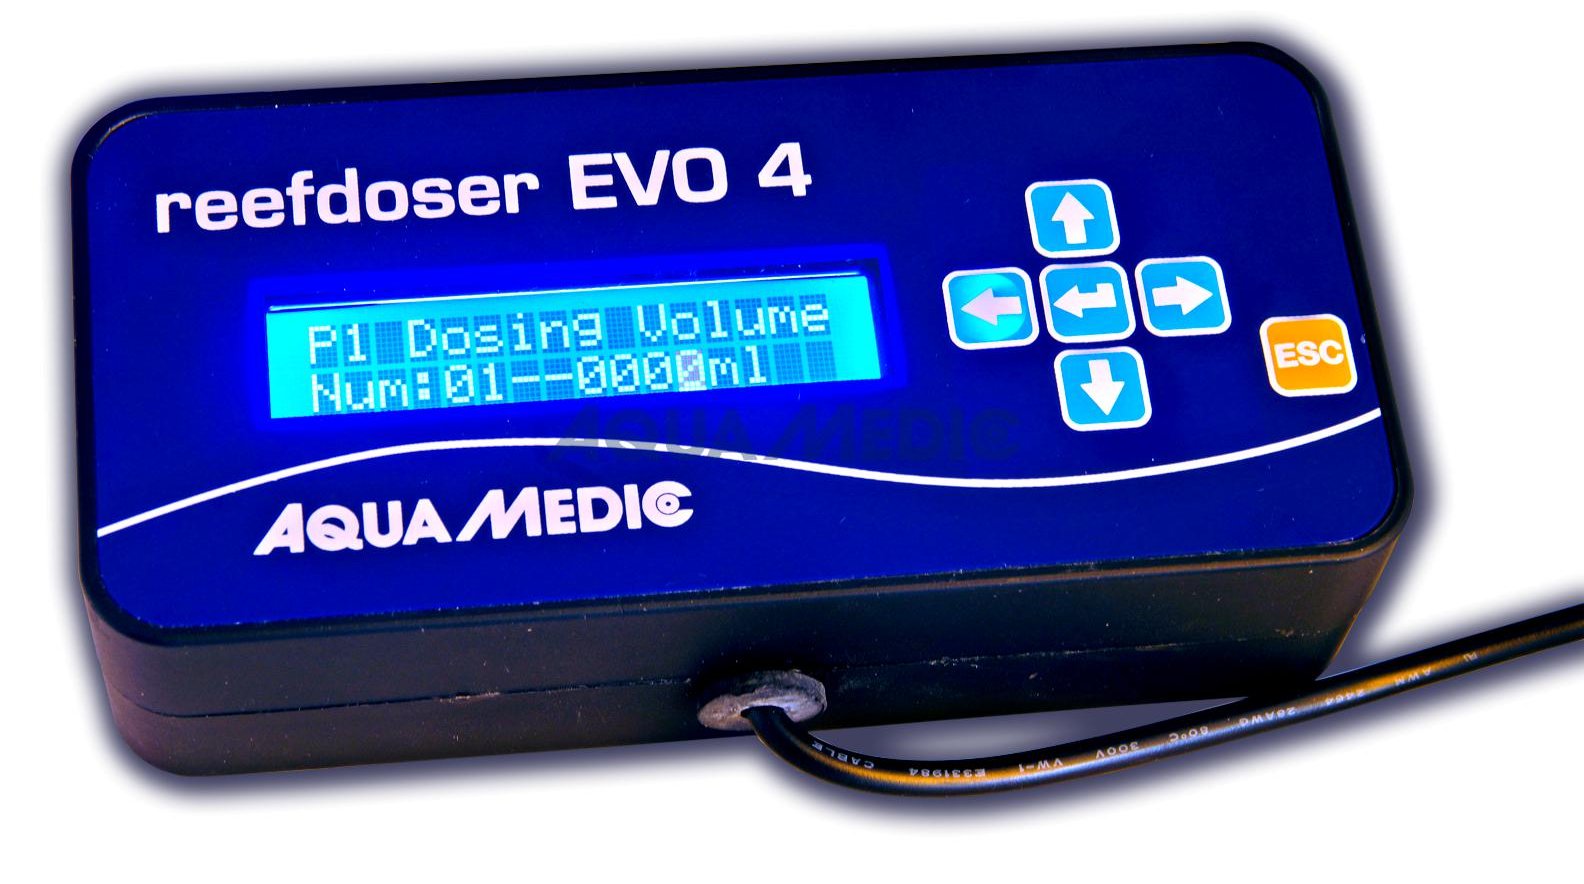 Aqua Medic Aqua Medic reefdoser EVO 4-4 Kanal Dosierpumpe 